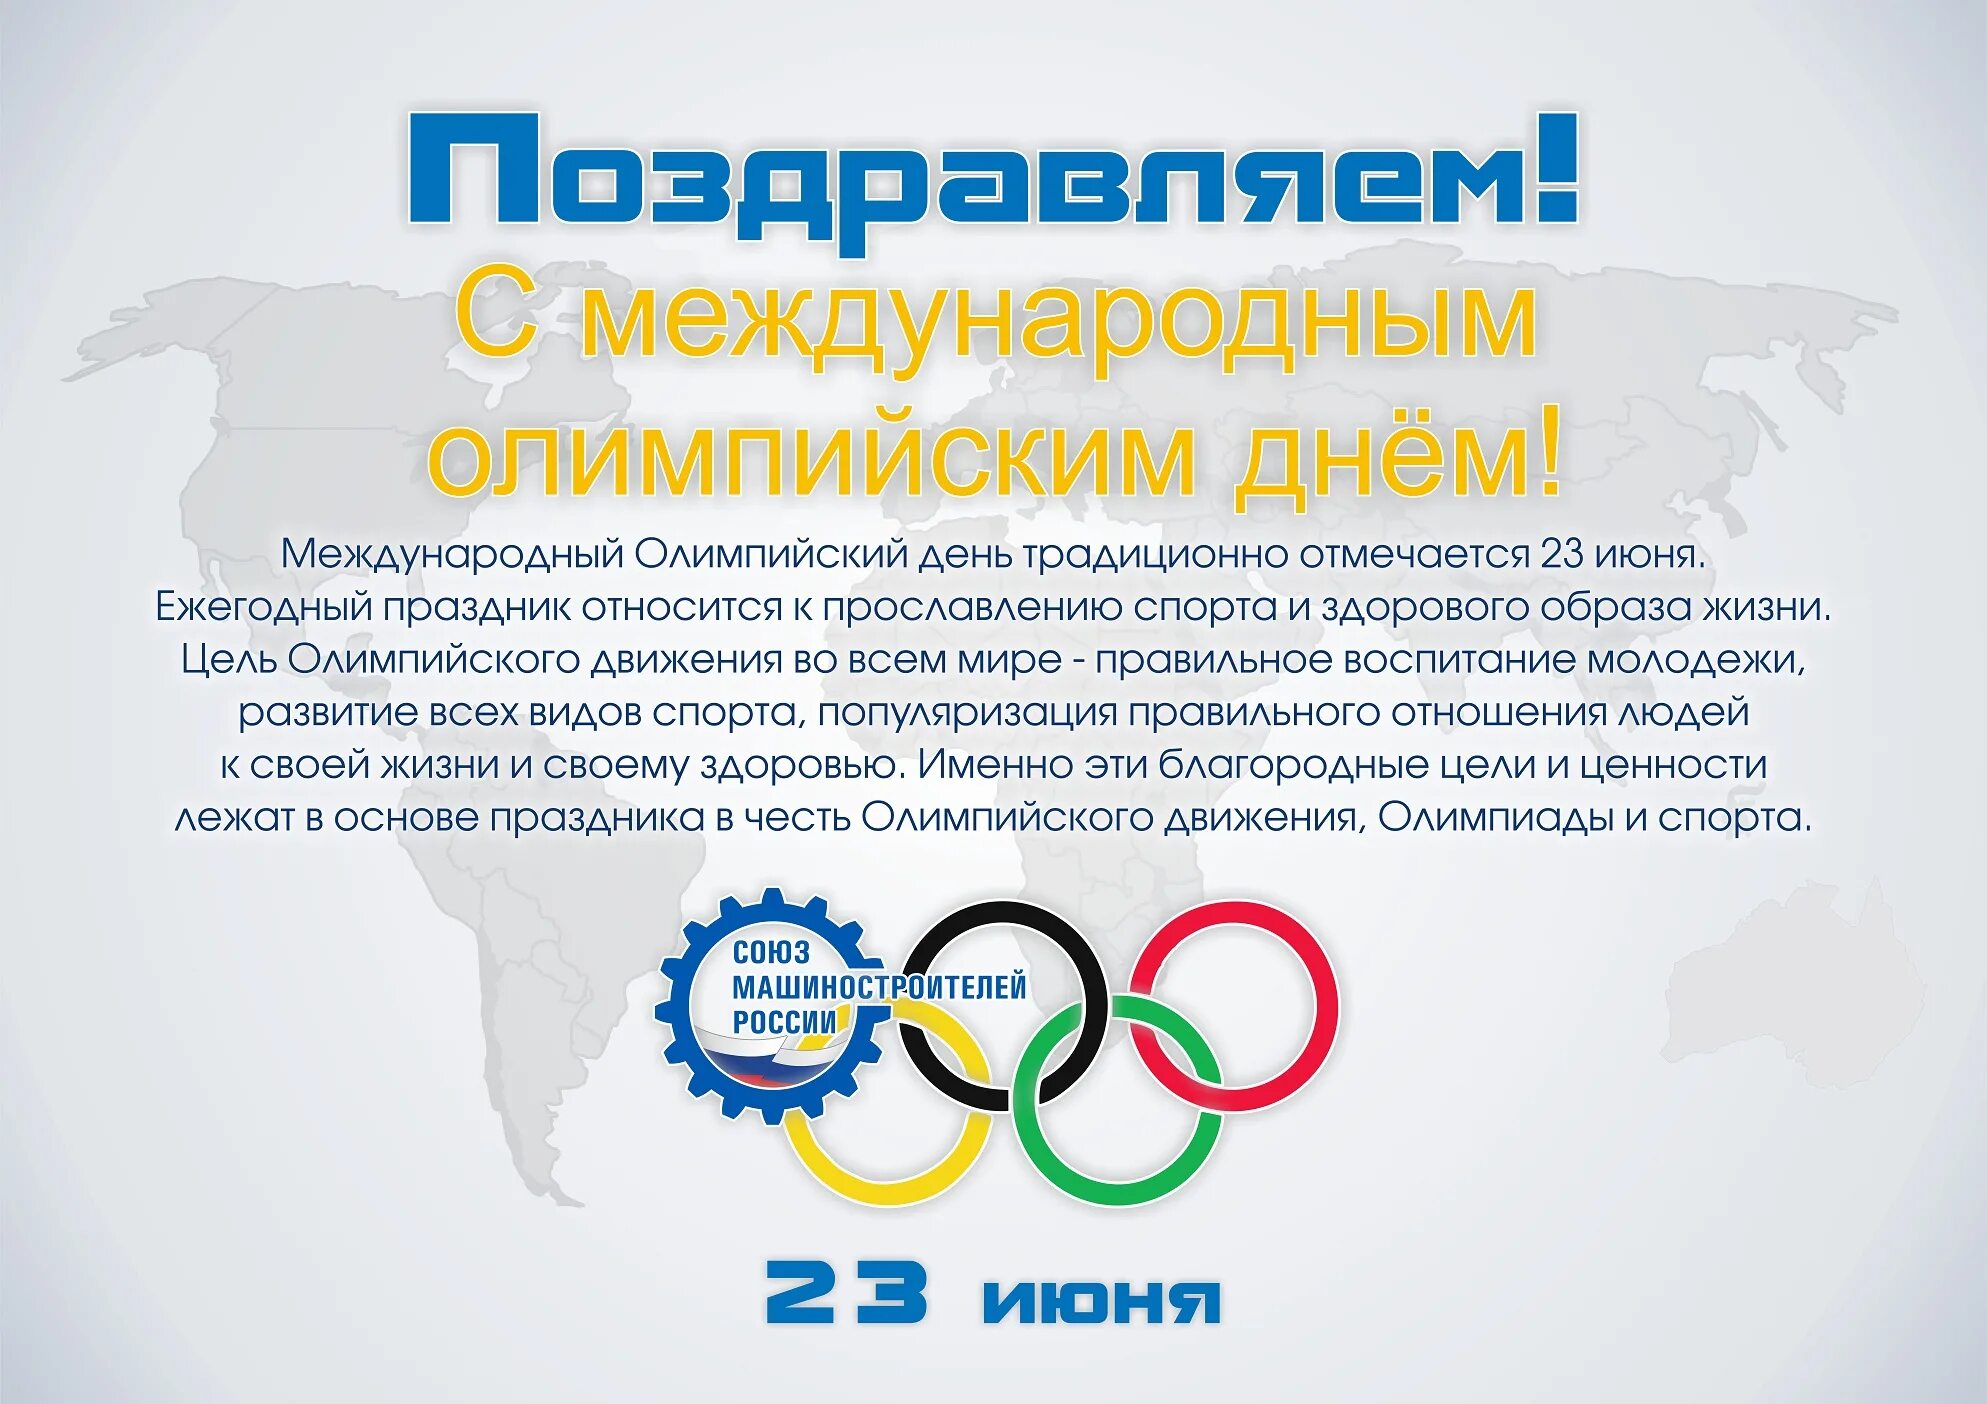 23 июня. Международный Олимпийский день. 23 Июня Международный Олимпийский день. Международный Олимпийский день поздравления. Международный Олимпийский день отмечается.